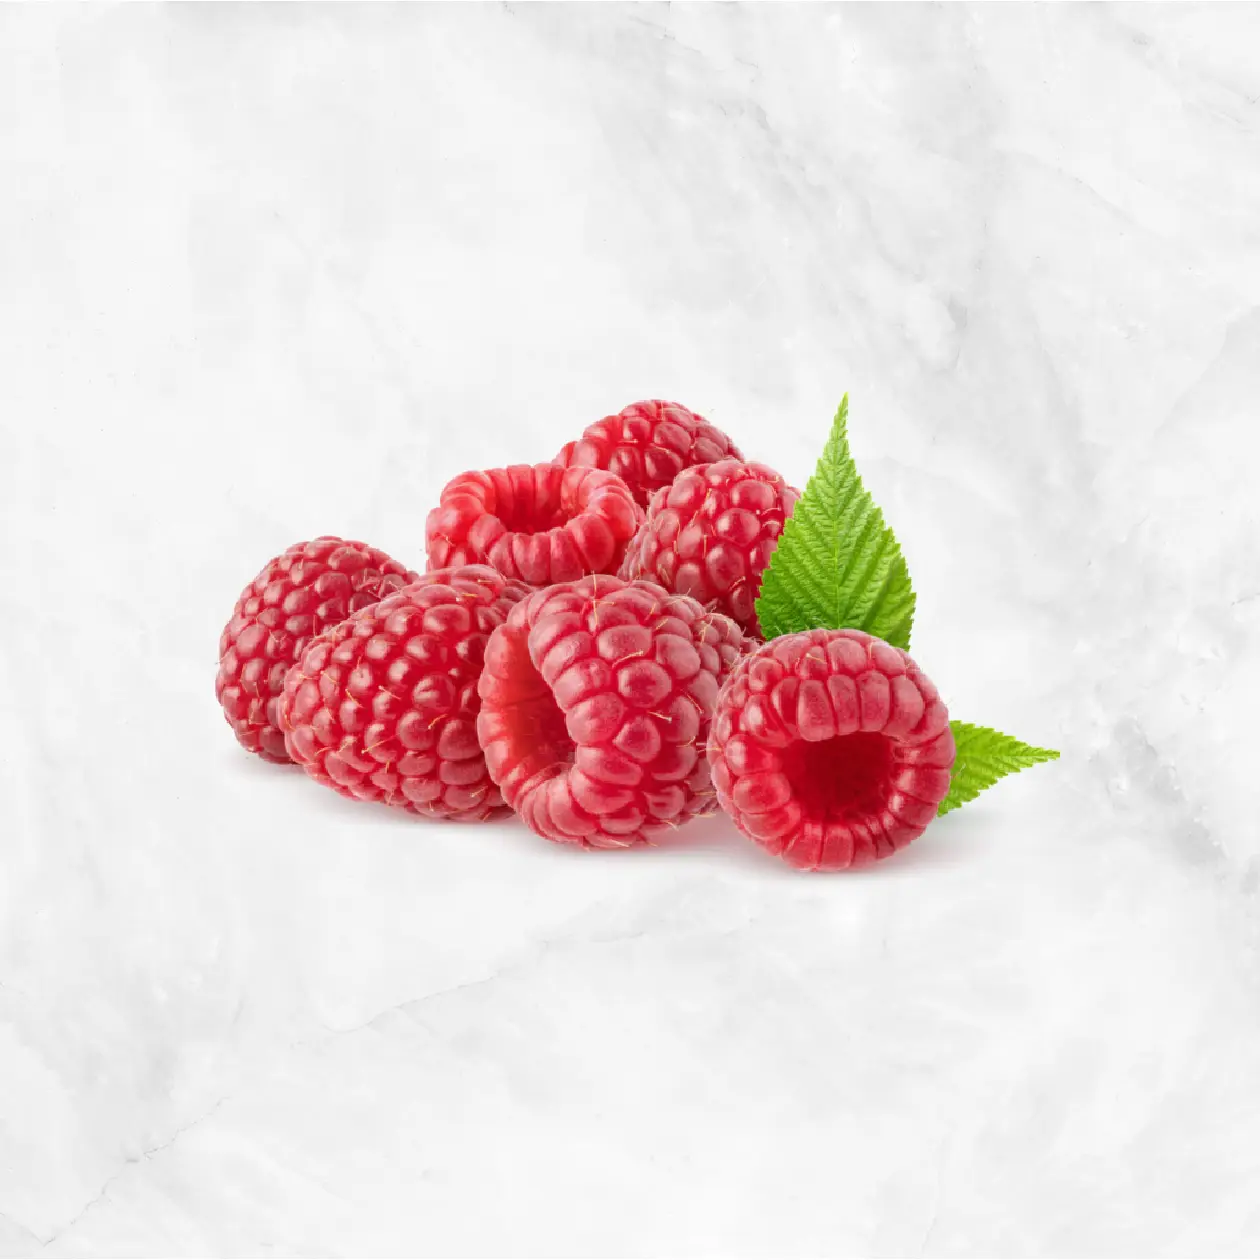 Organic Raspberries Delivery